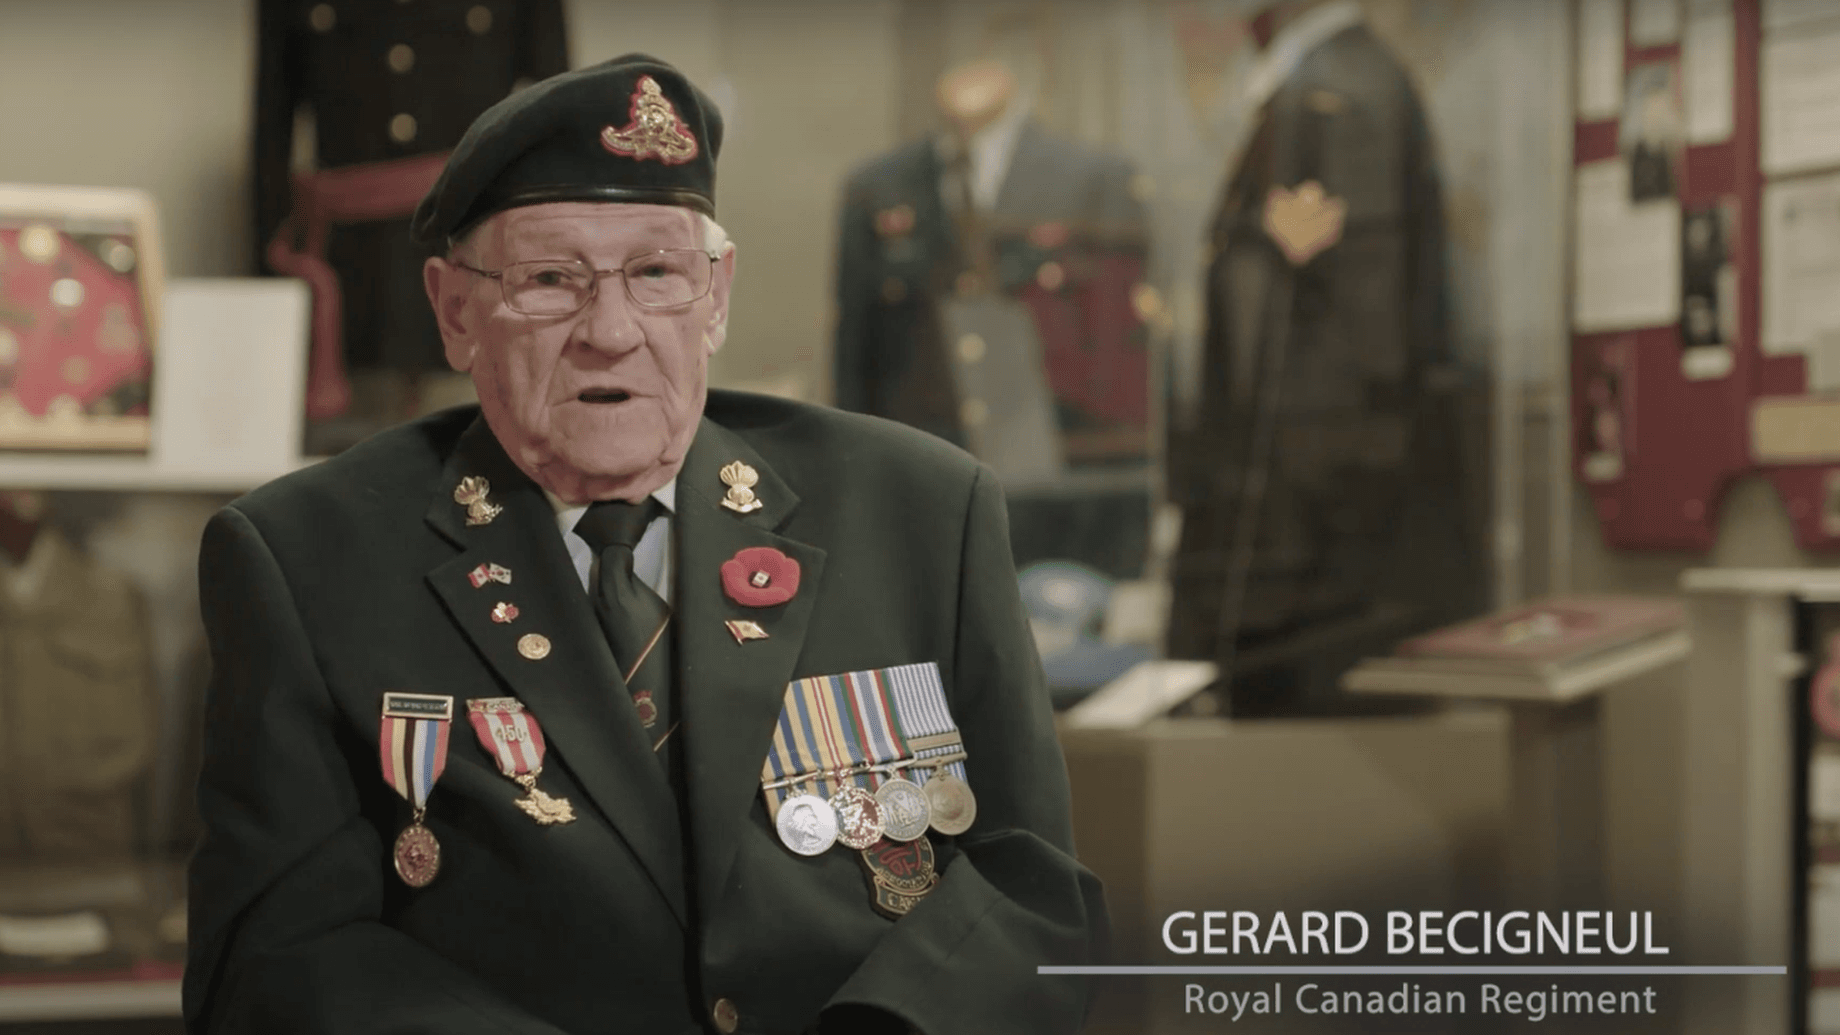 Record of Service: Gerard Becigneul